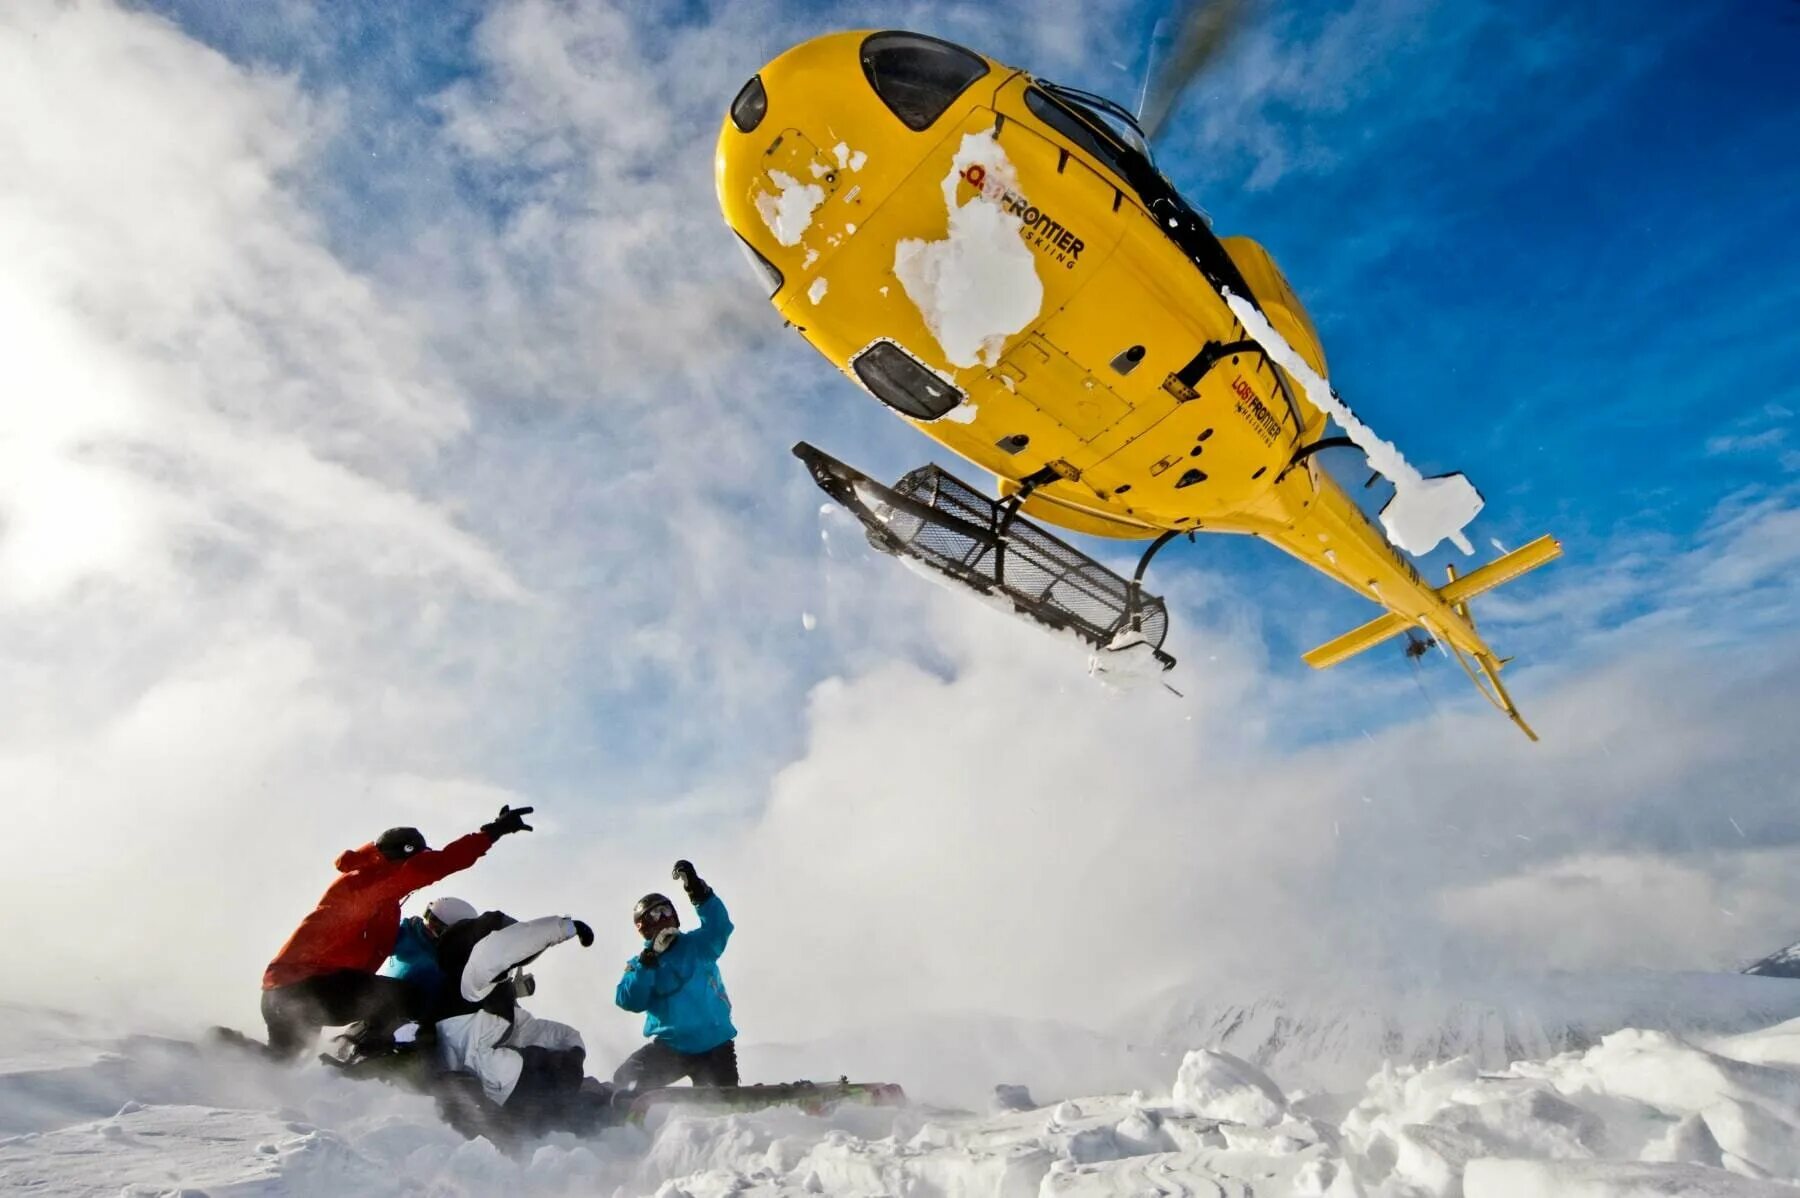 Вертолет шерегеш. Хелискиинг. Heli Ski Камчатка. Хели ски вертолетах. Хелискиинг вид спорта.